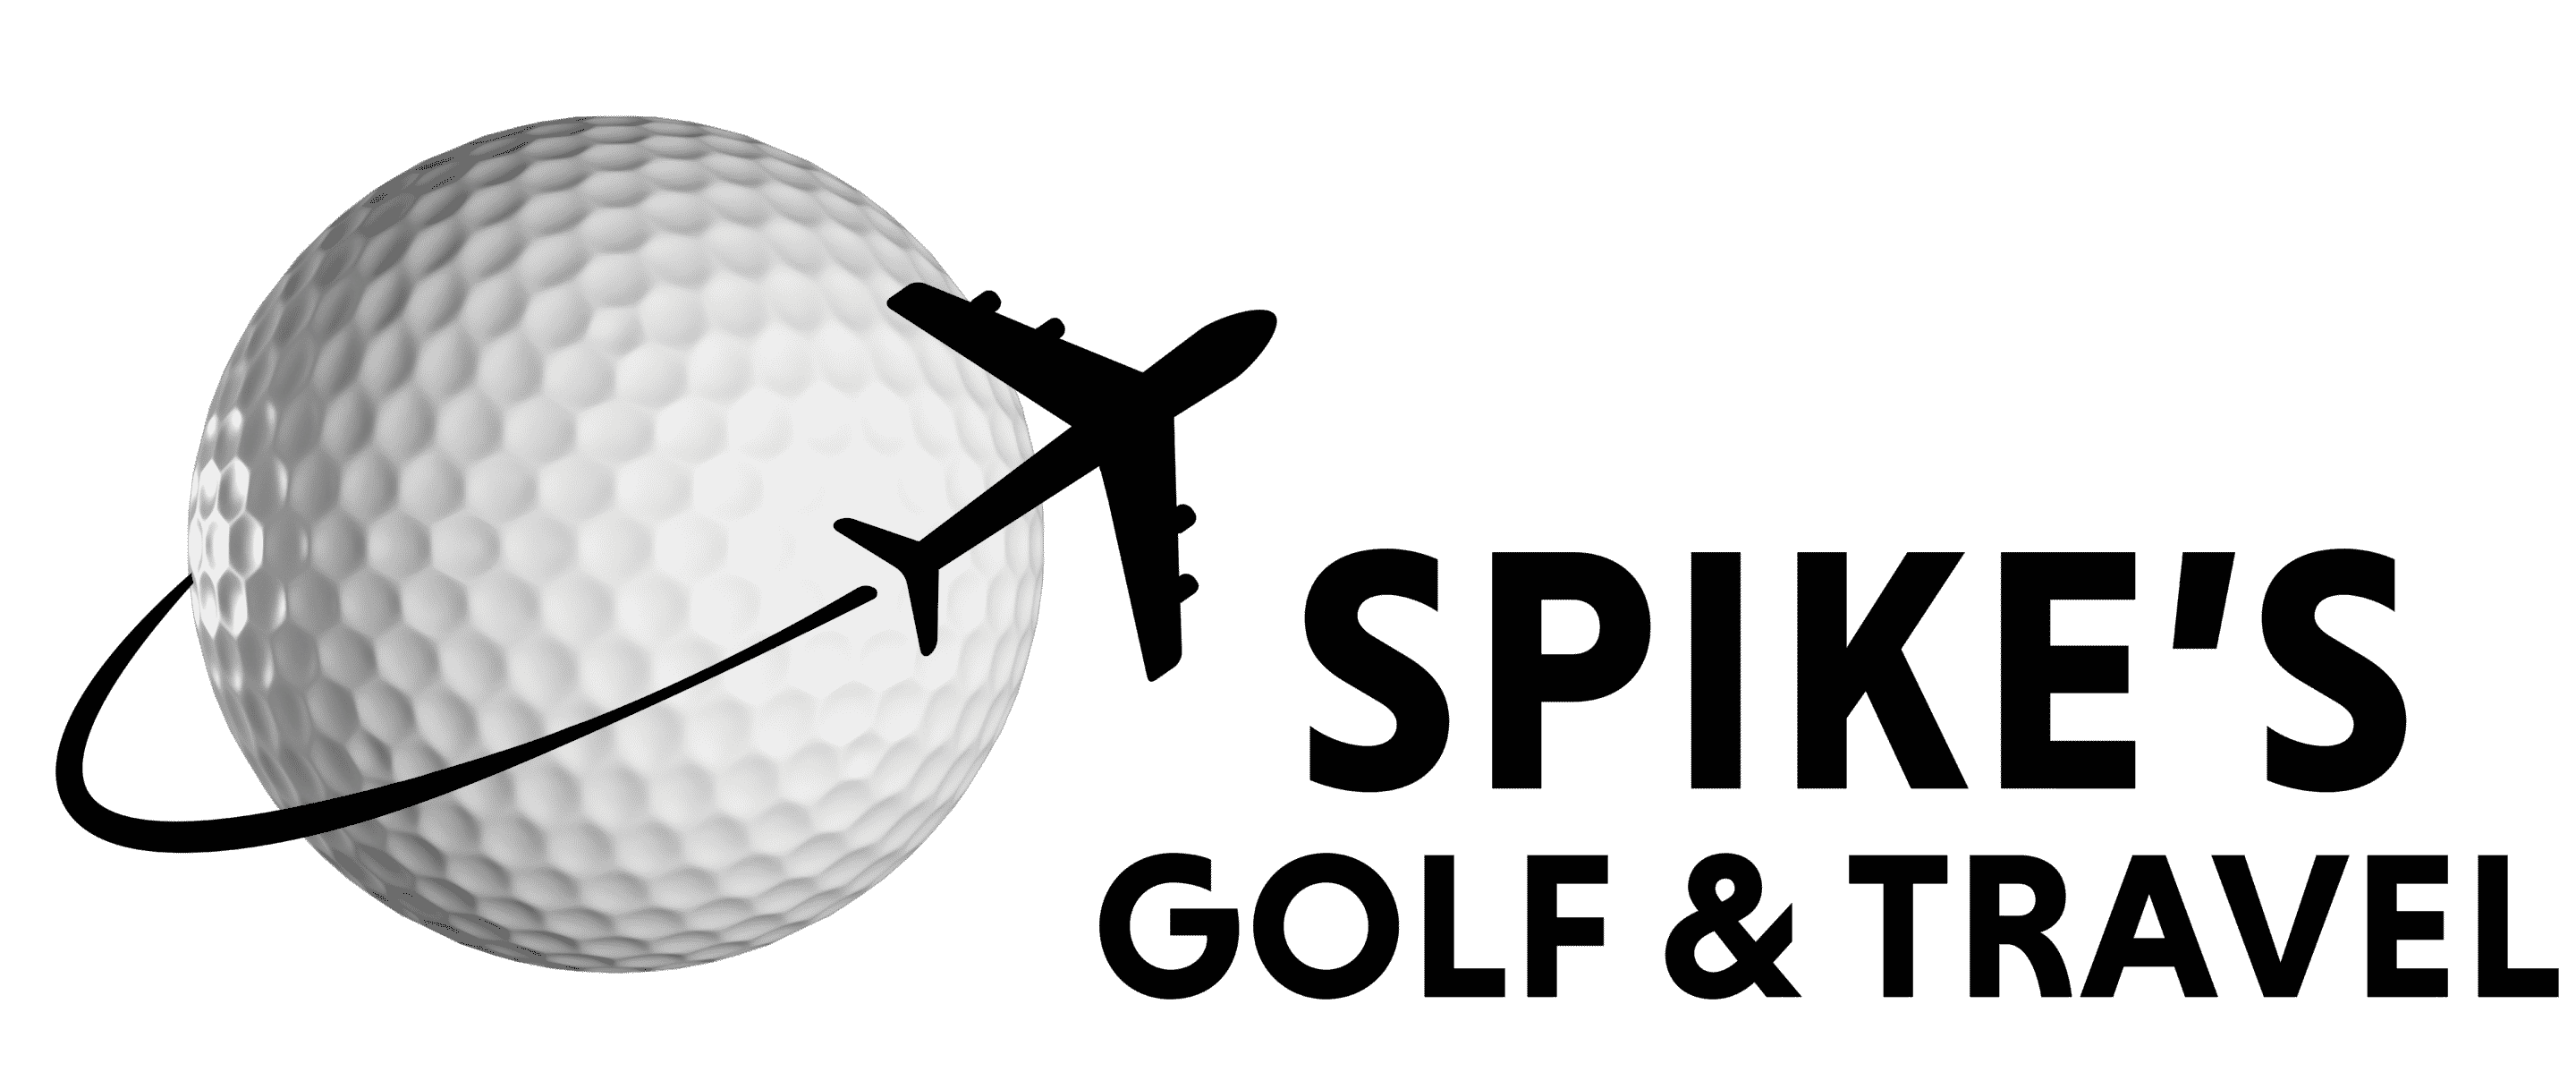 Spike on Golf & Travel